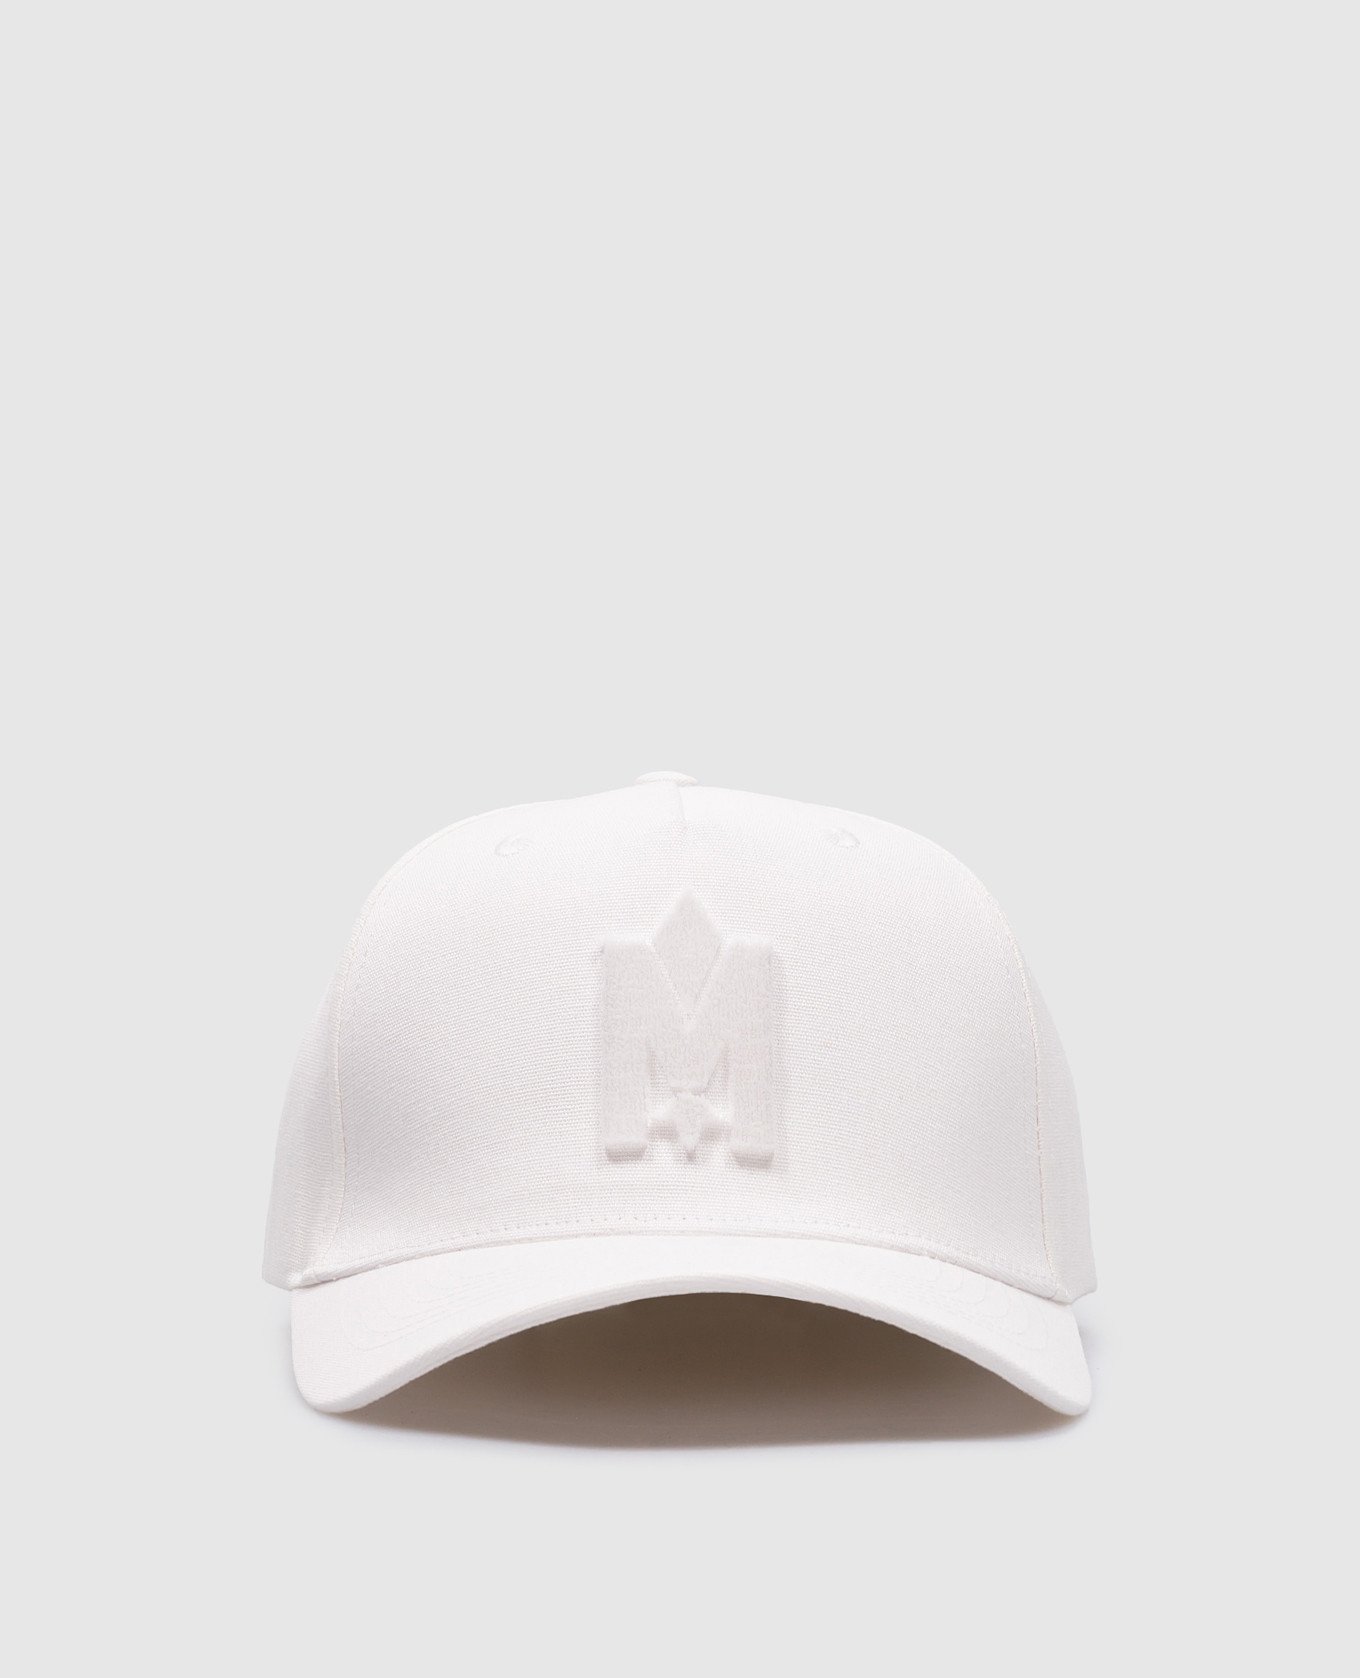 Біла кепка ANDERSON-V з фактурною емблемою логотипа